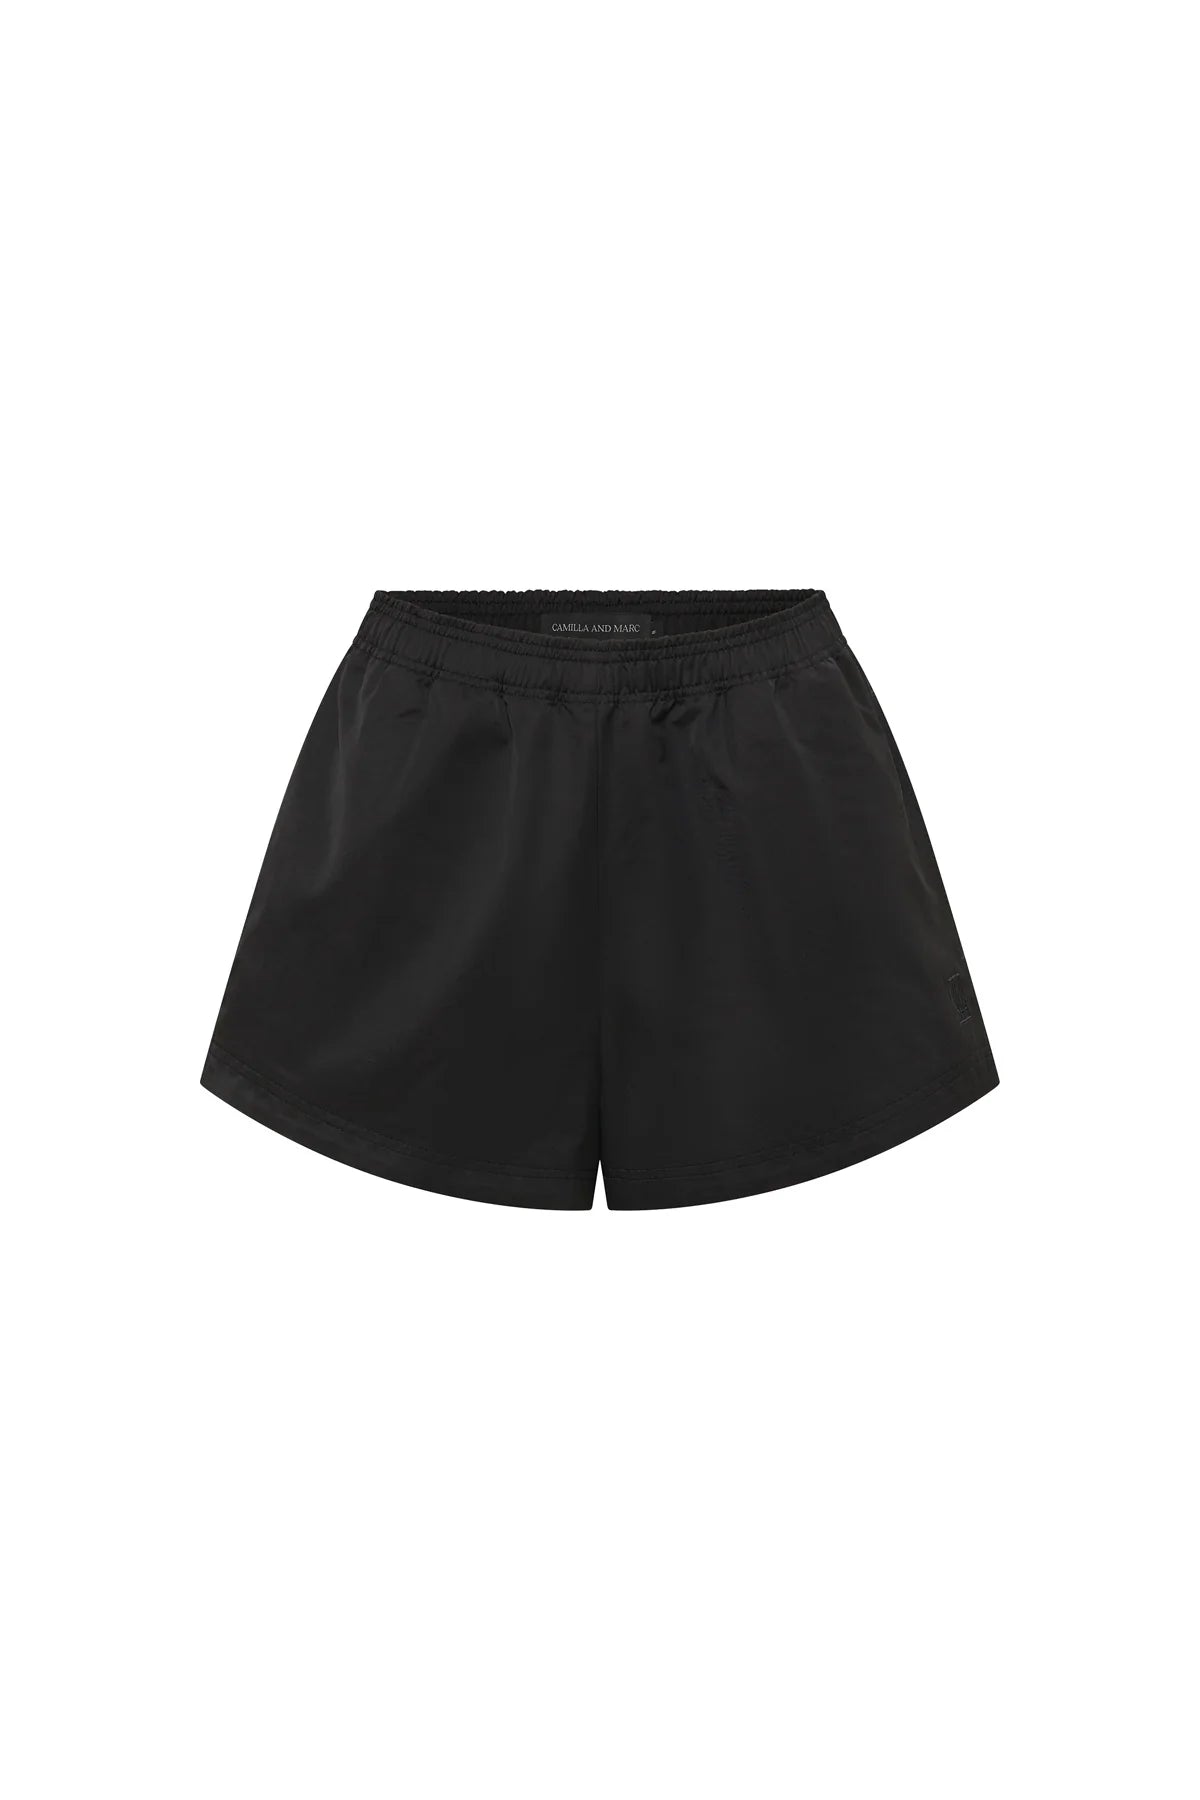 C&M Shorts - Casual C&M | Hunter Short - Black